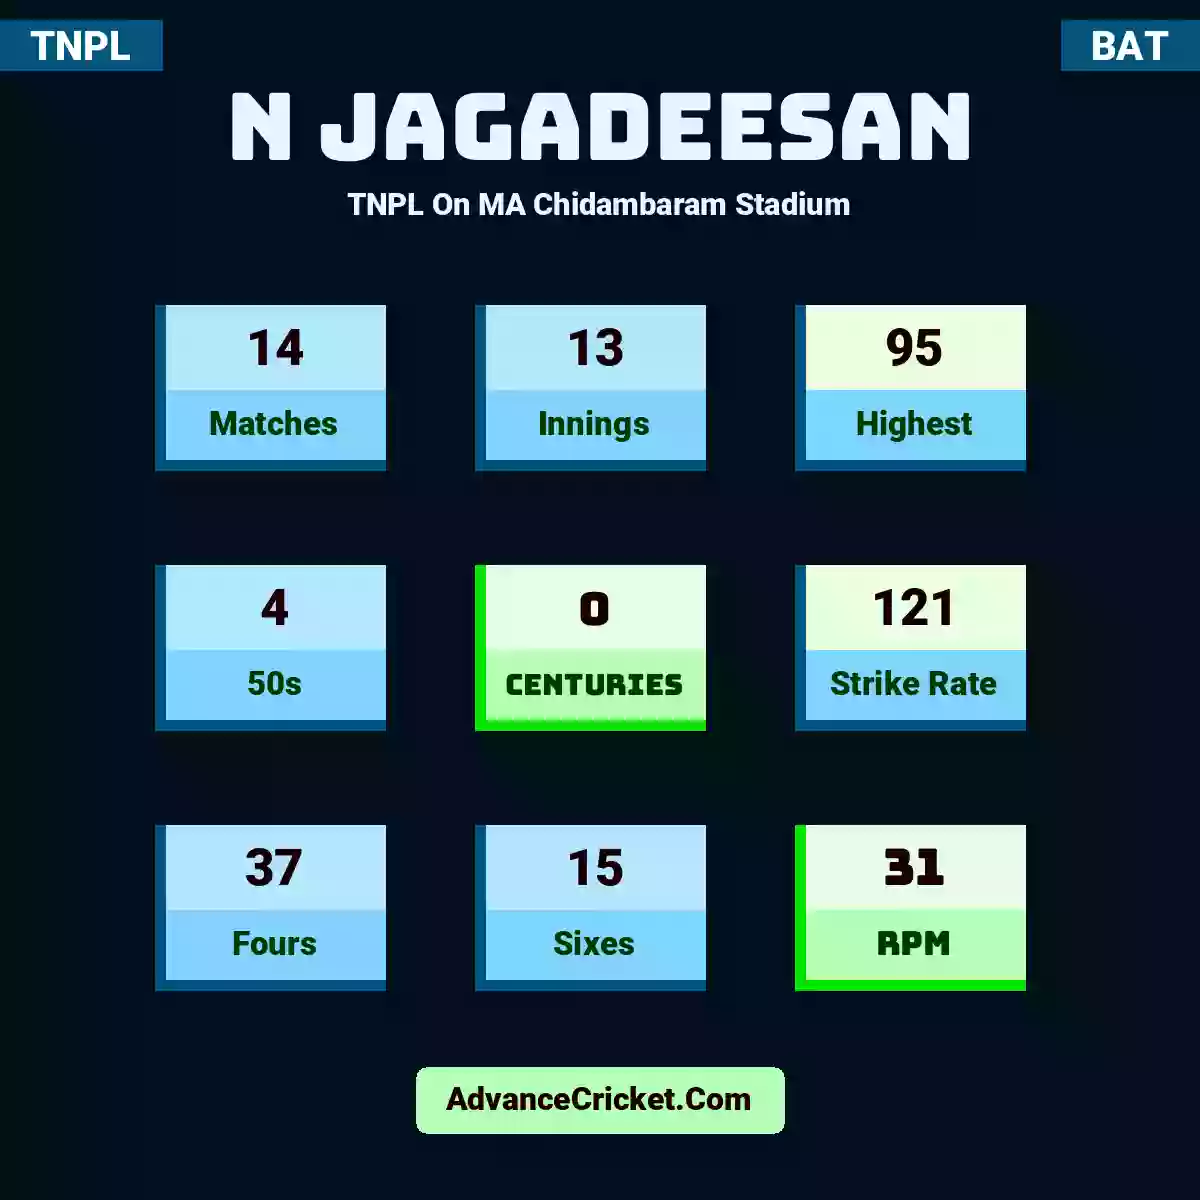 N Jagadeesan TNPL  On MA Chidambaram Stadium, N Jagadeesan played 14 matches, scored 95 runs as highest, 4 half-centuries, and 0 centuries, with a strike rate of 121. N.Jagadeesan hit 37 fours and 15 sixes, with an RPM of 31.